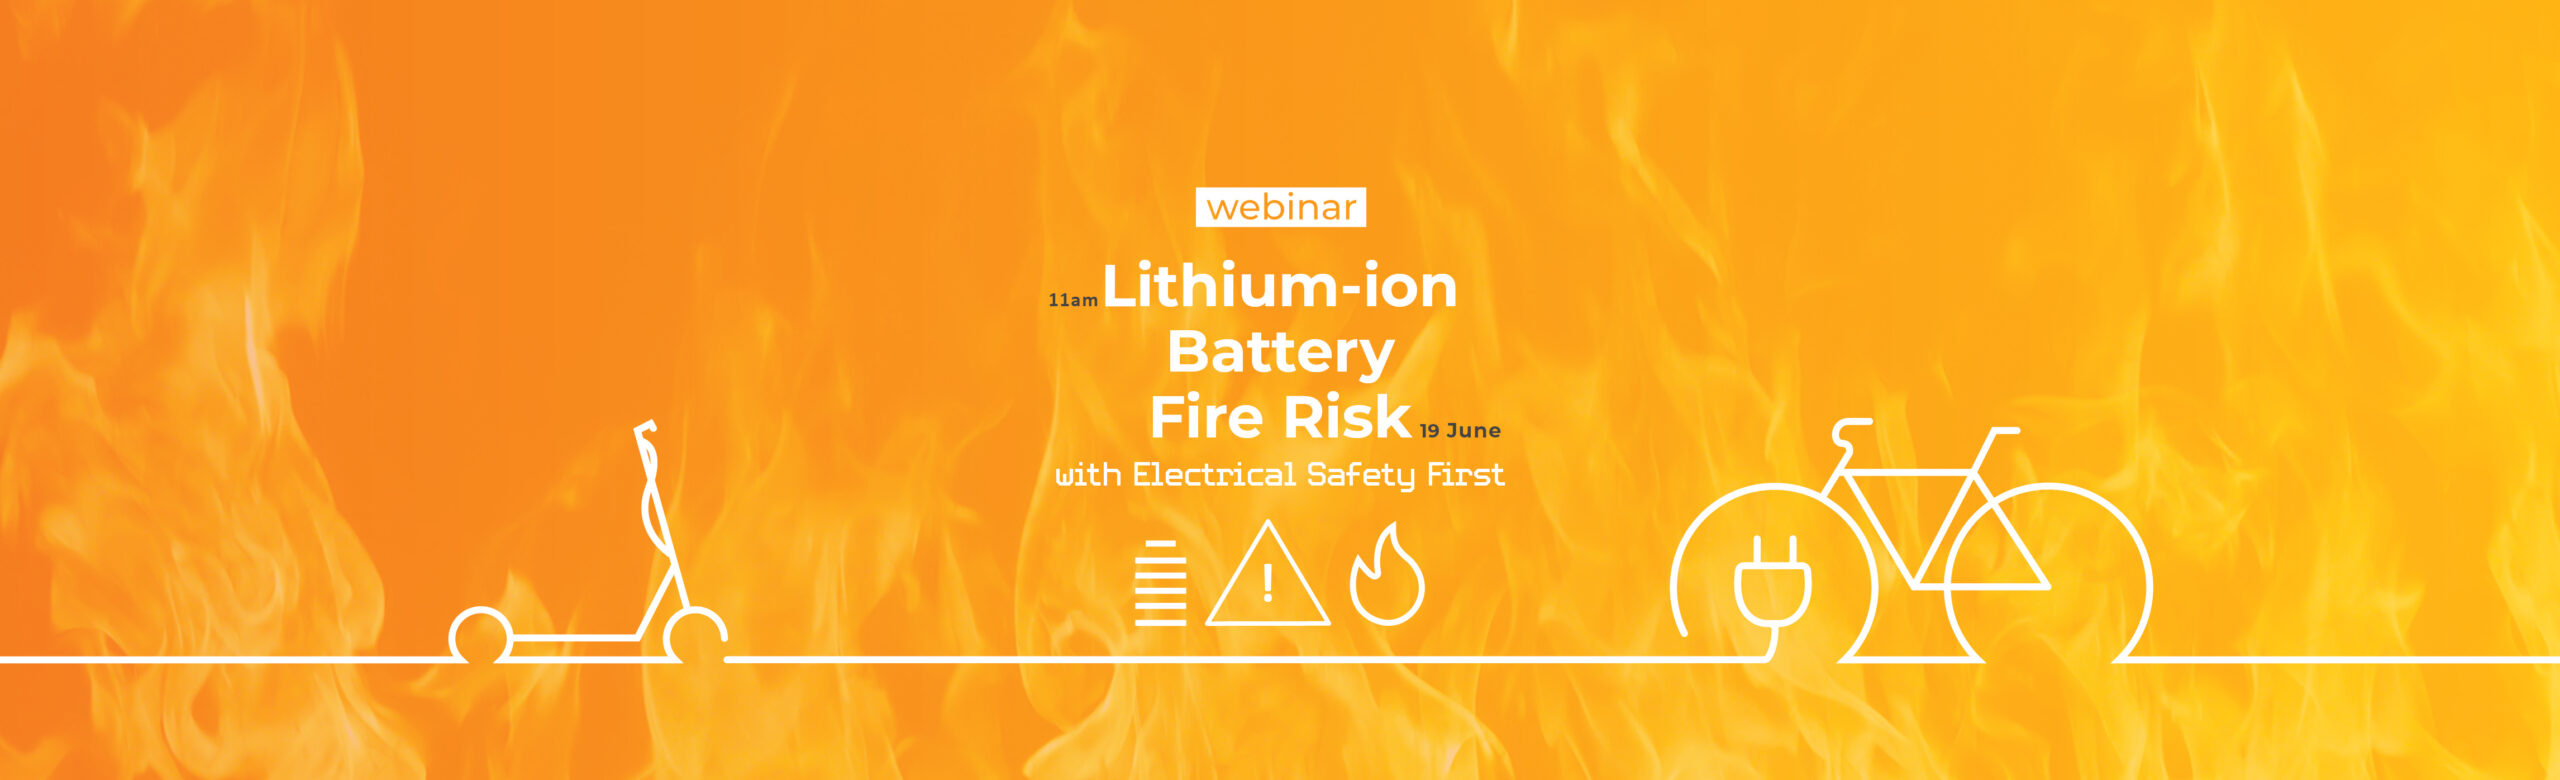 Lithium-ion Battery Fire Risk Webinar